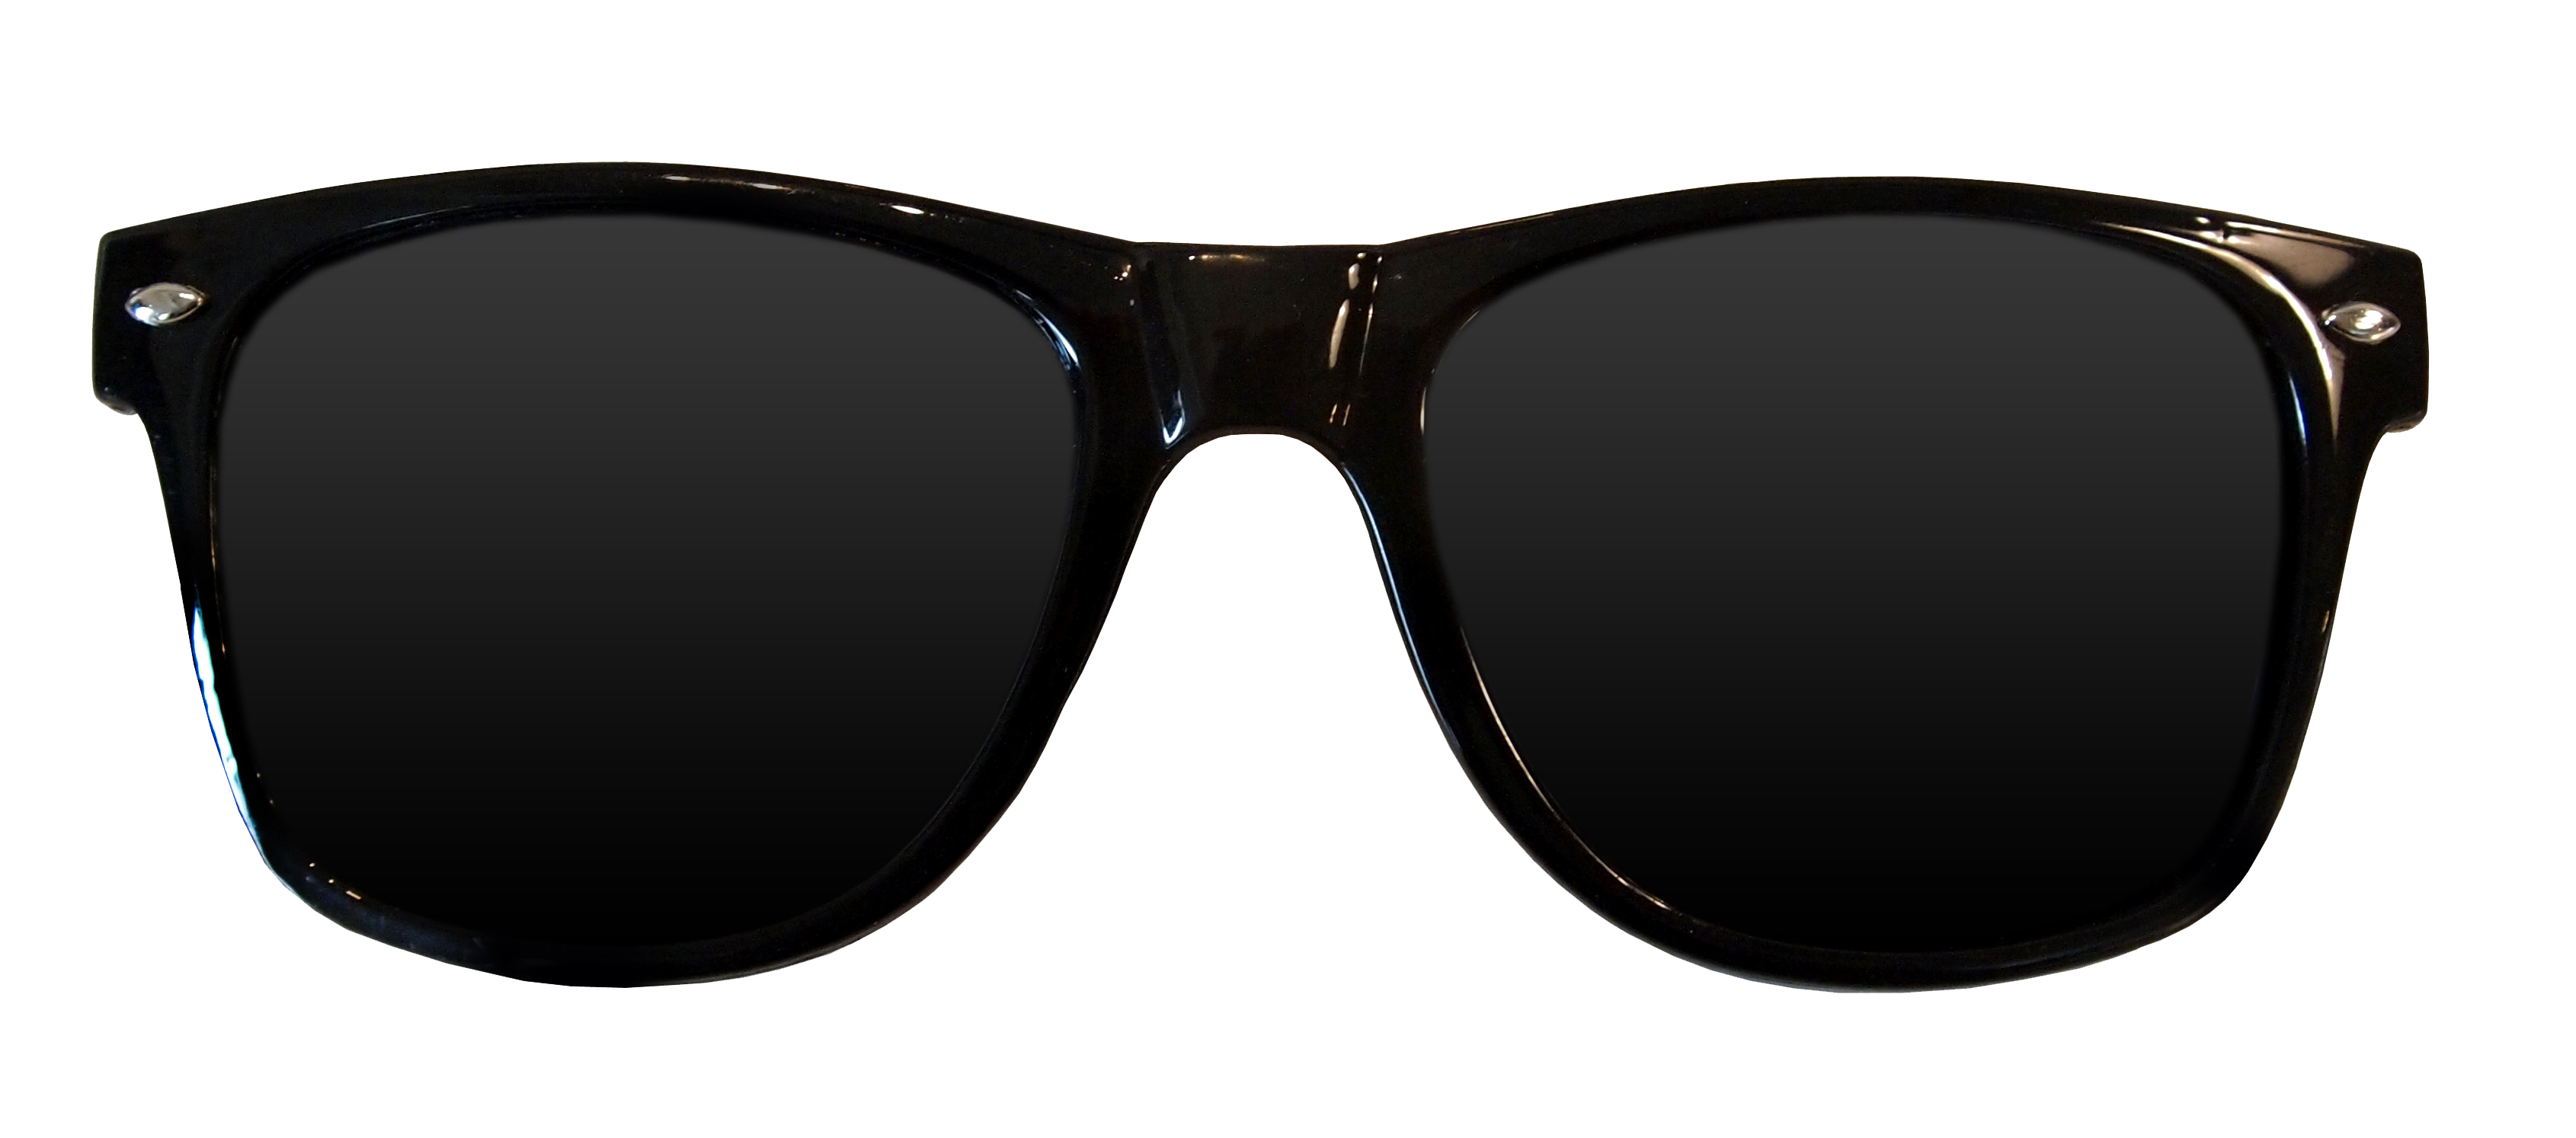 sunglasses transparent bg
